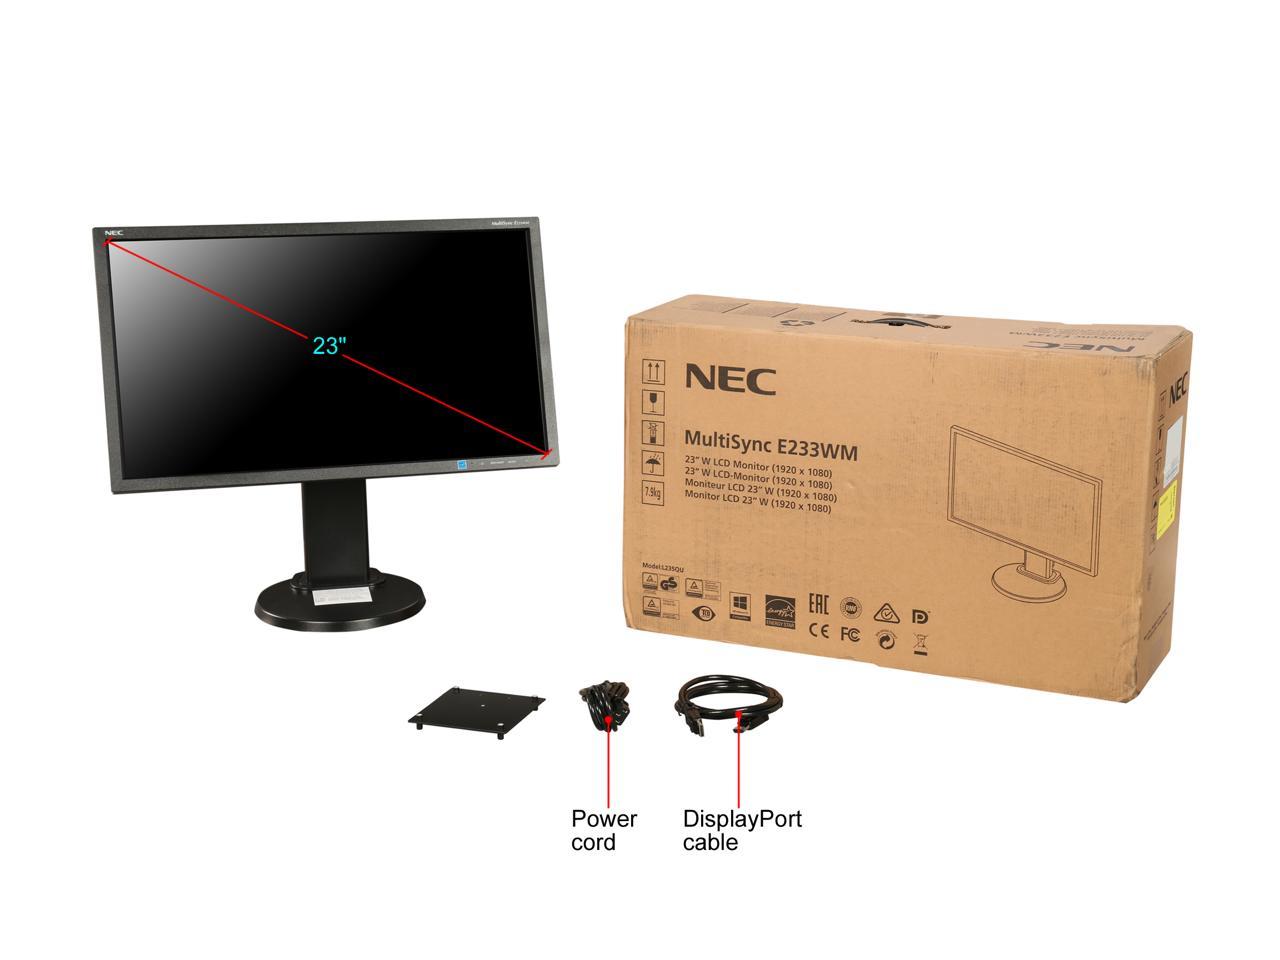 NEC 23" MultiSync E233WM - LED Business monitor